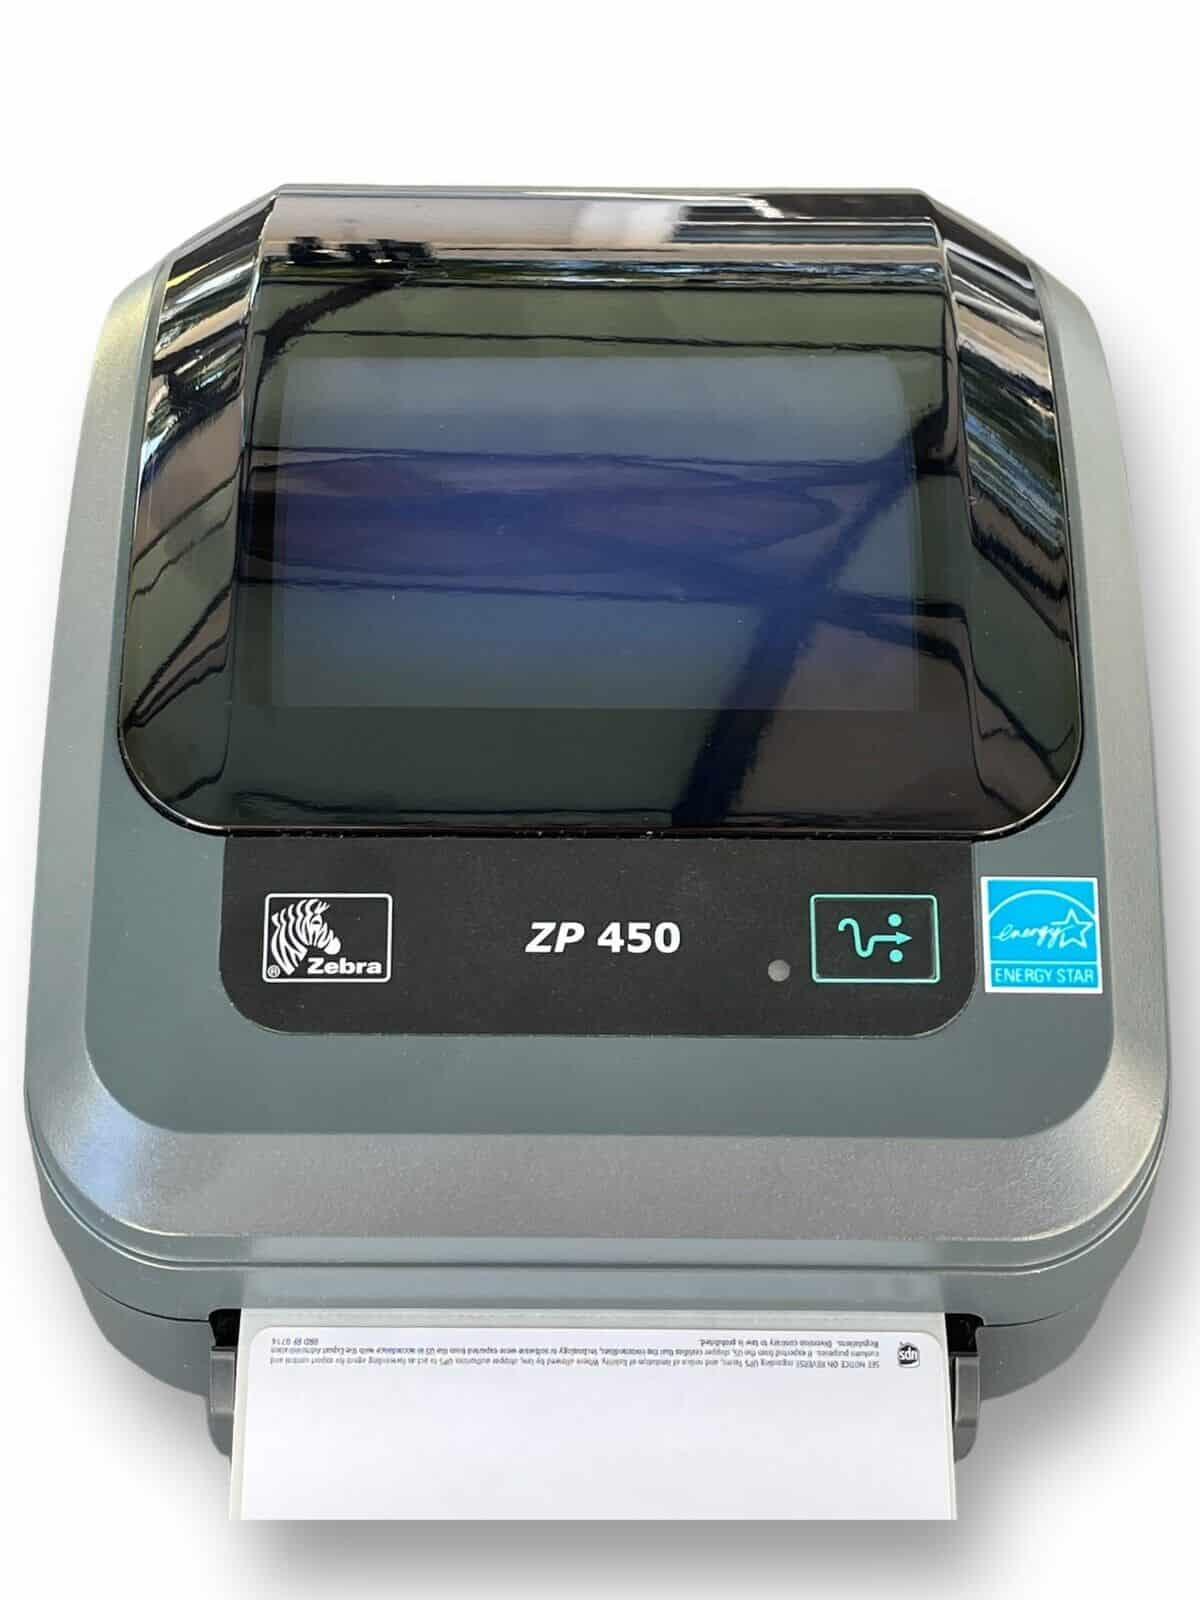 Setting Up Your Zebra Zp 450 Printer Installation Guide Gadgetmates 9722